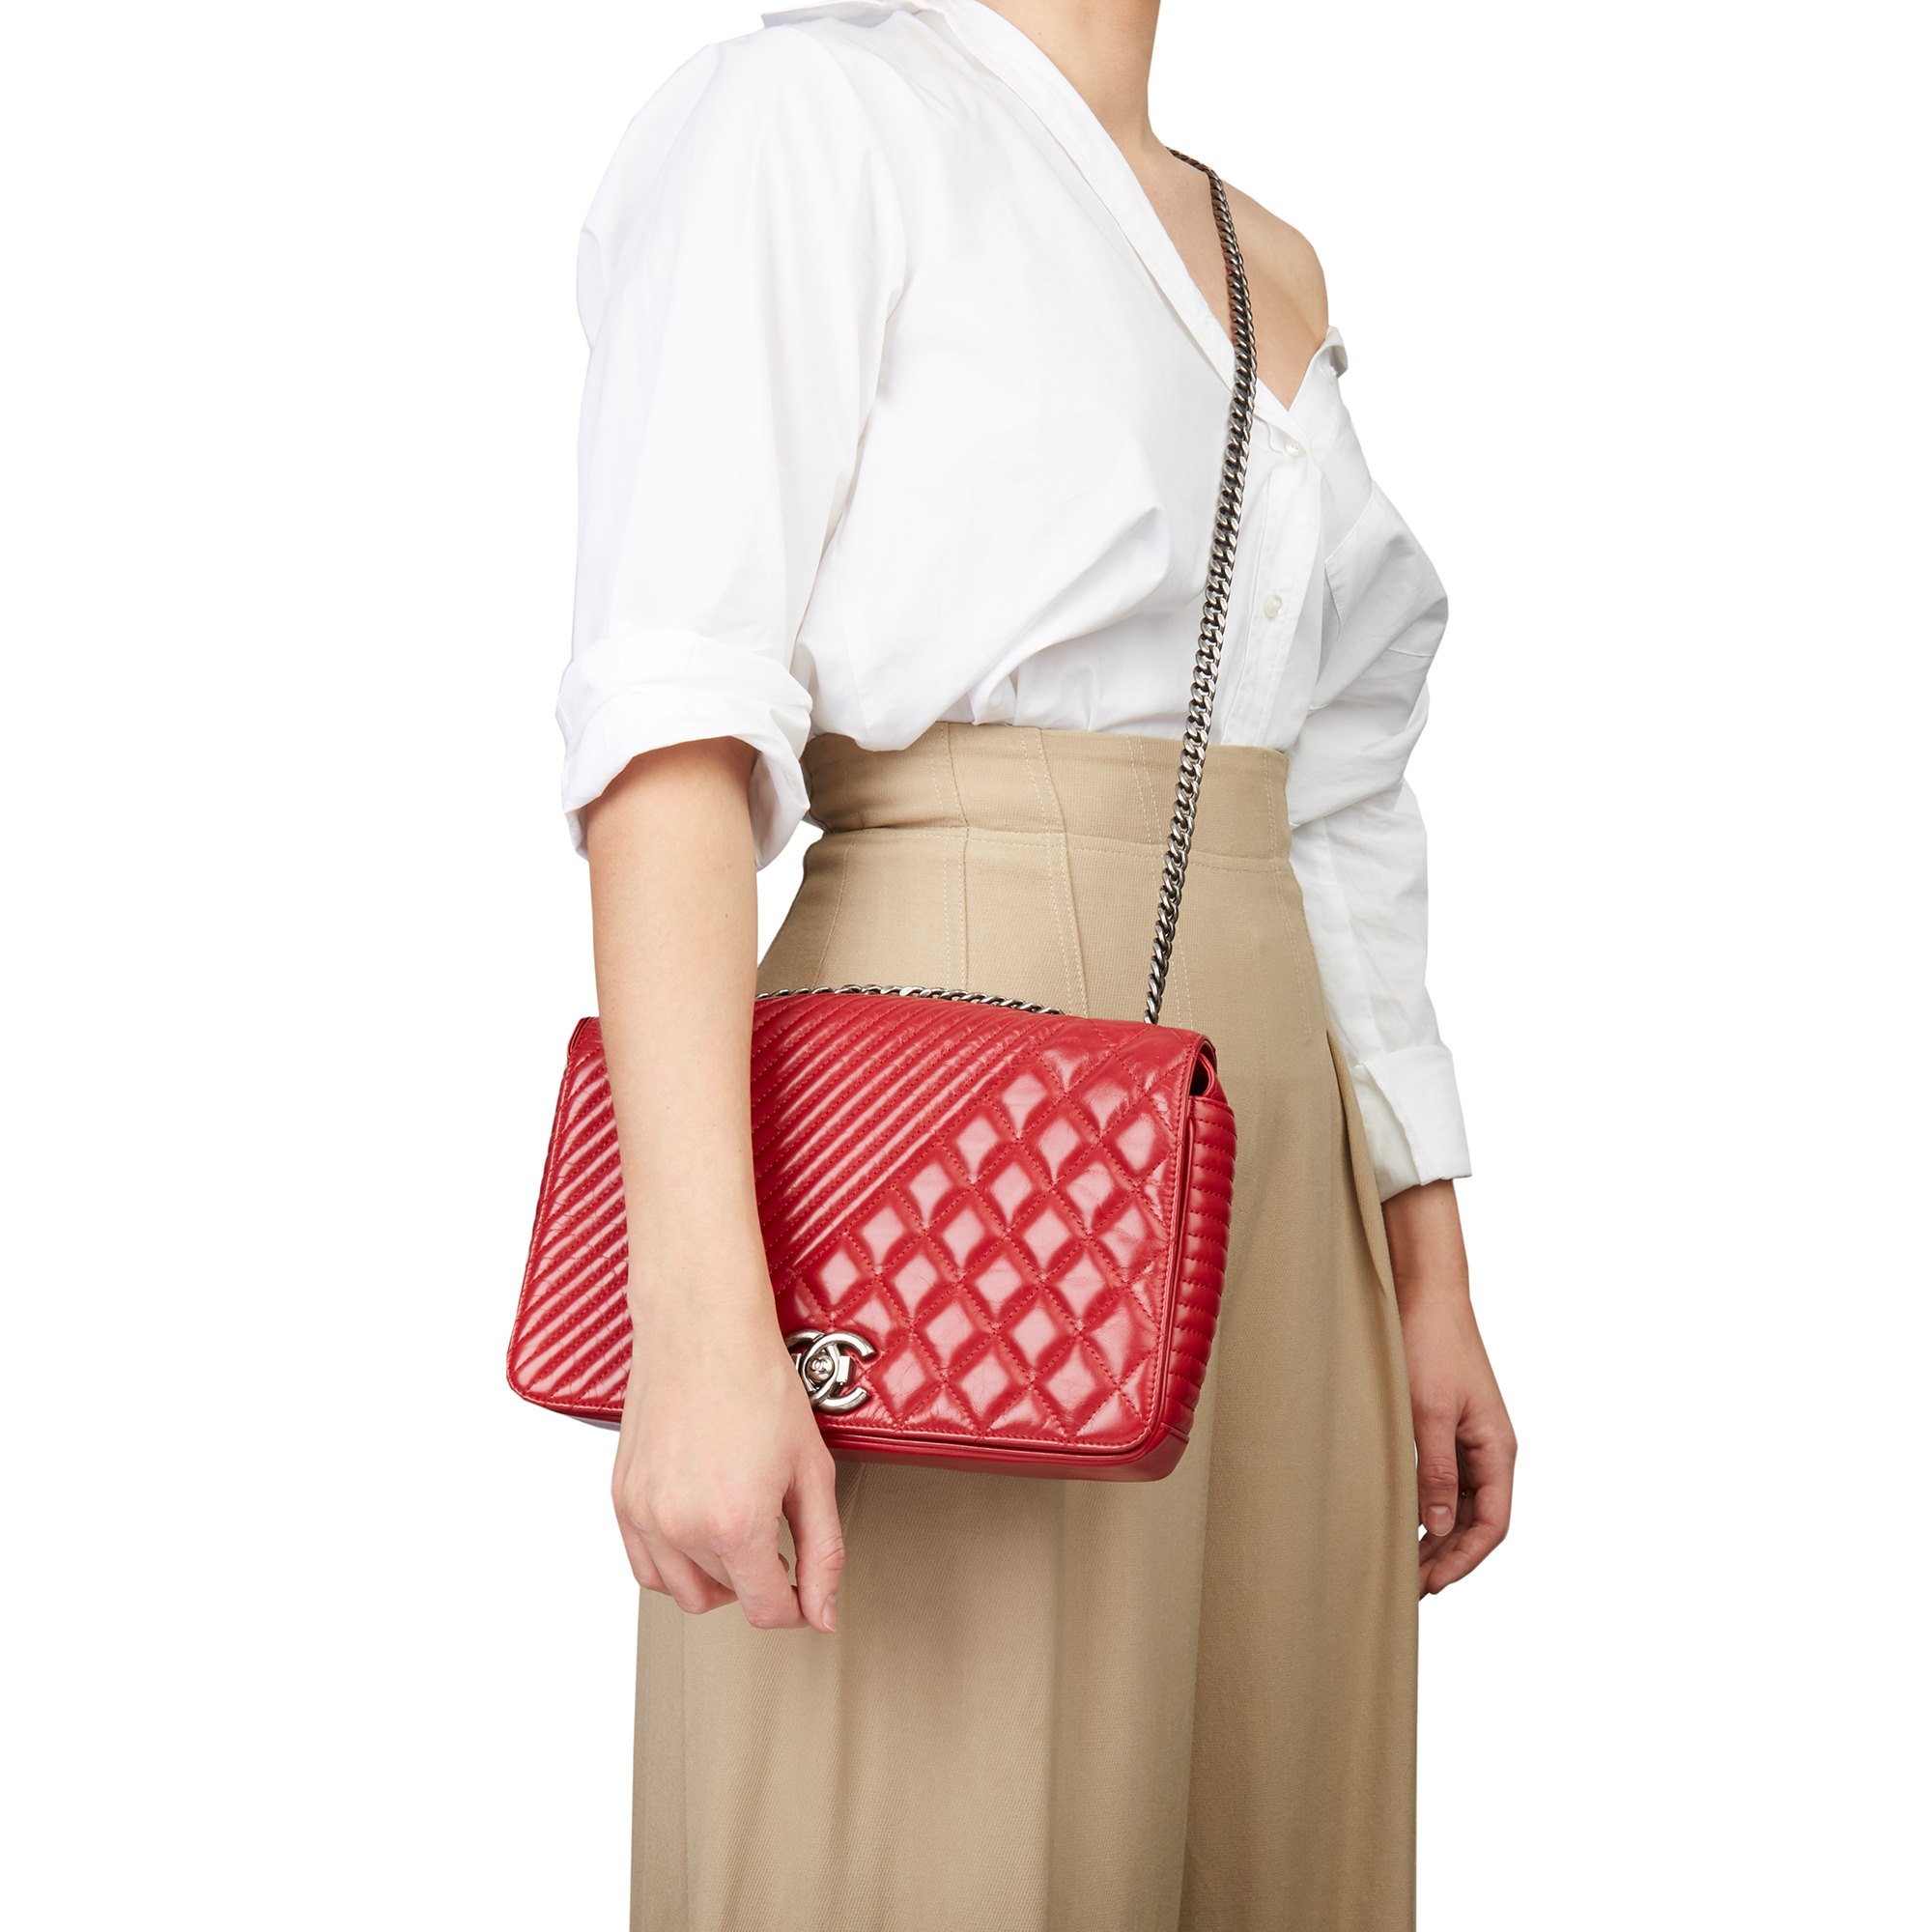 Chanel Medium Coco Boy Flap Bag 14 Hb3114 Second Hand Handbags